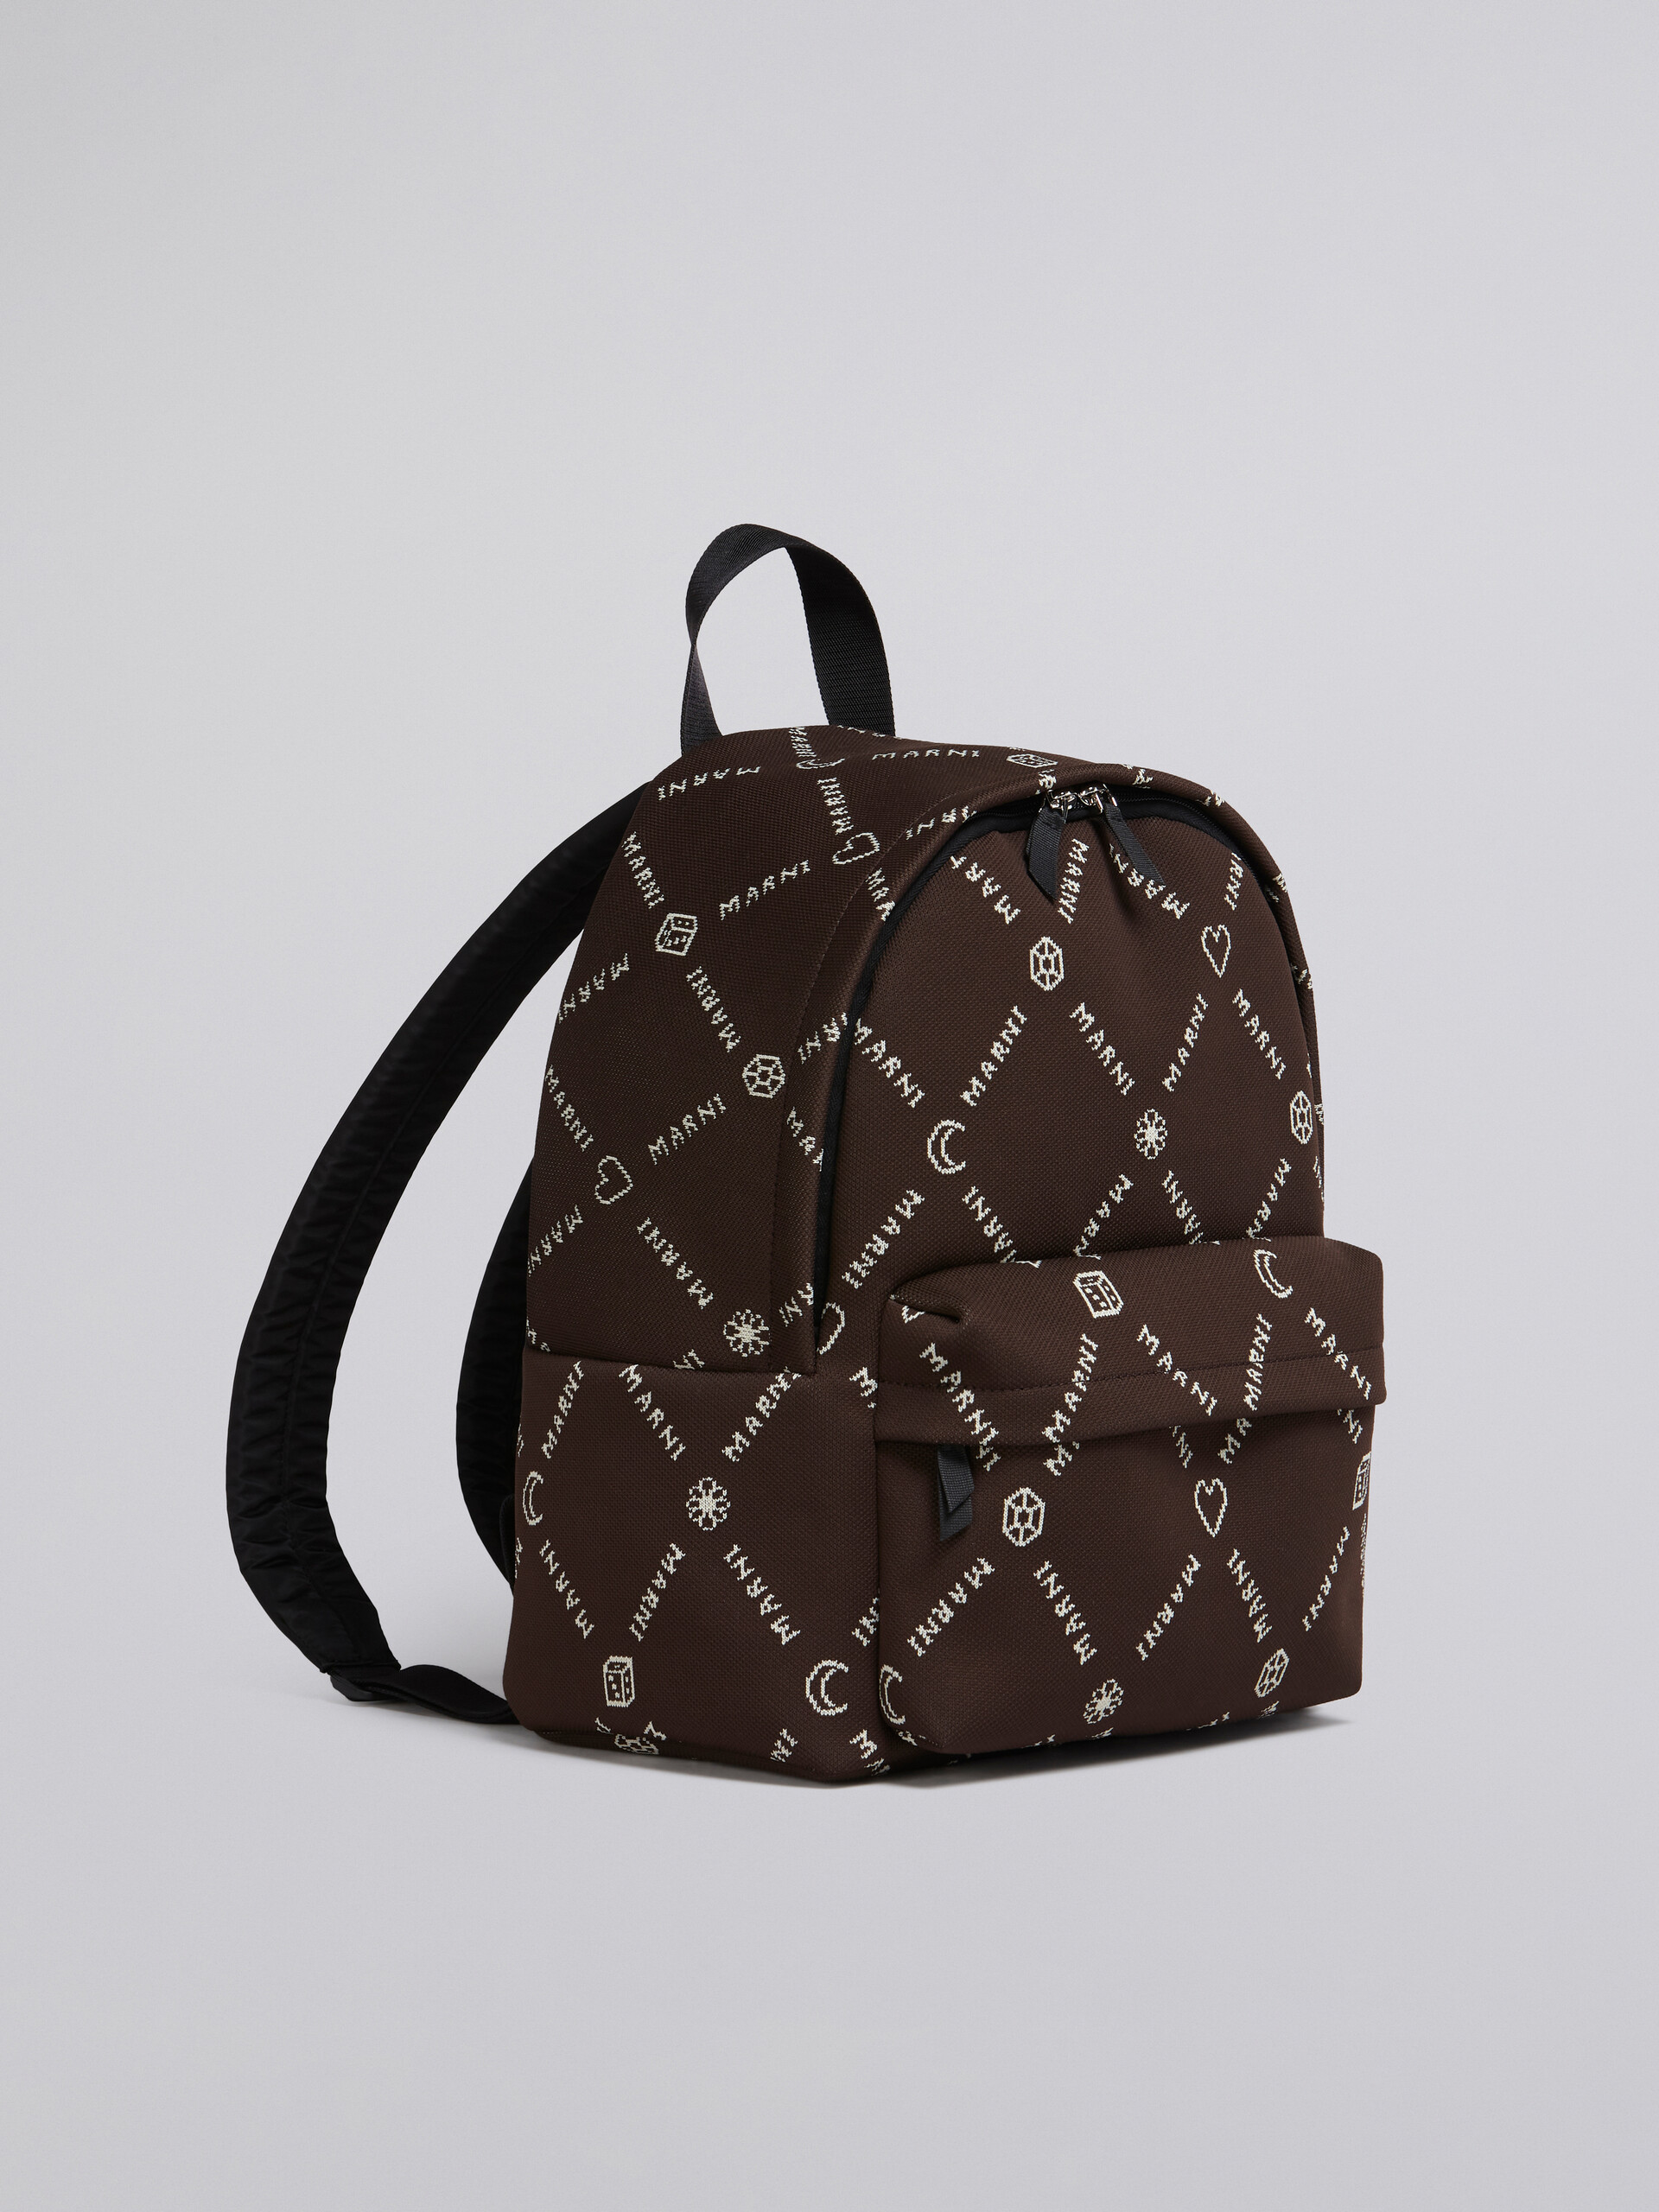 Marnigram jacquard backpack - Backpack - Image 6